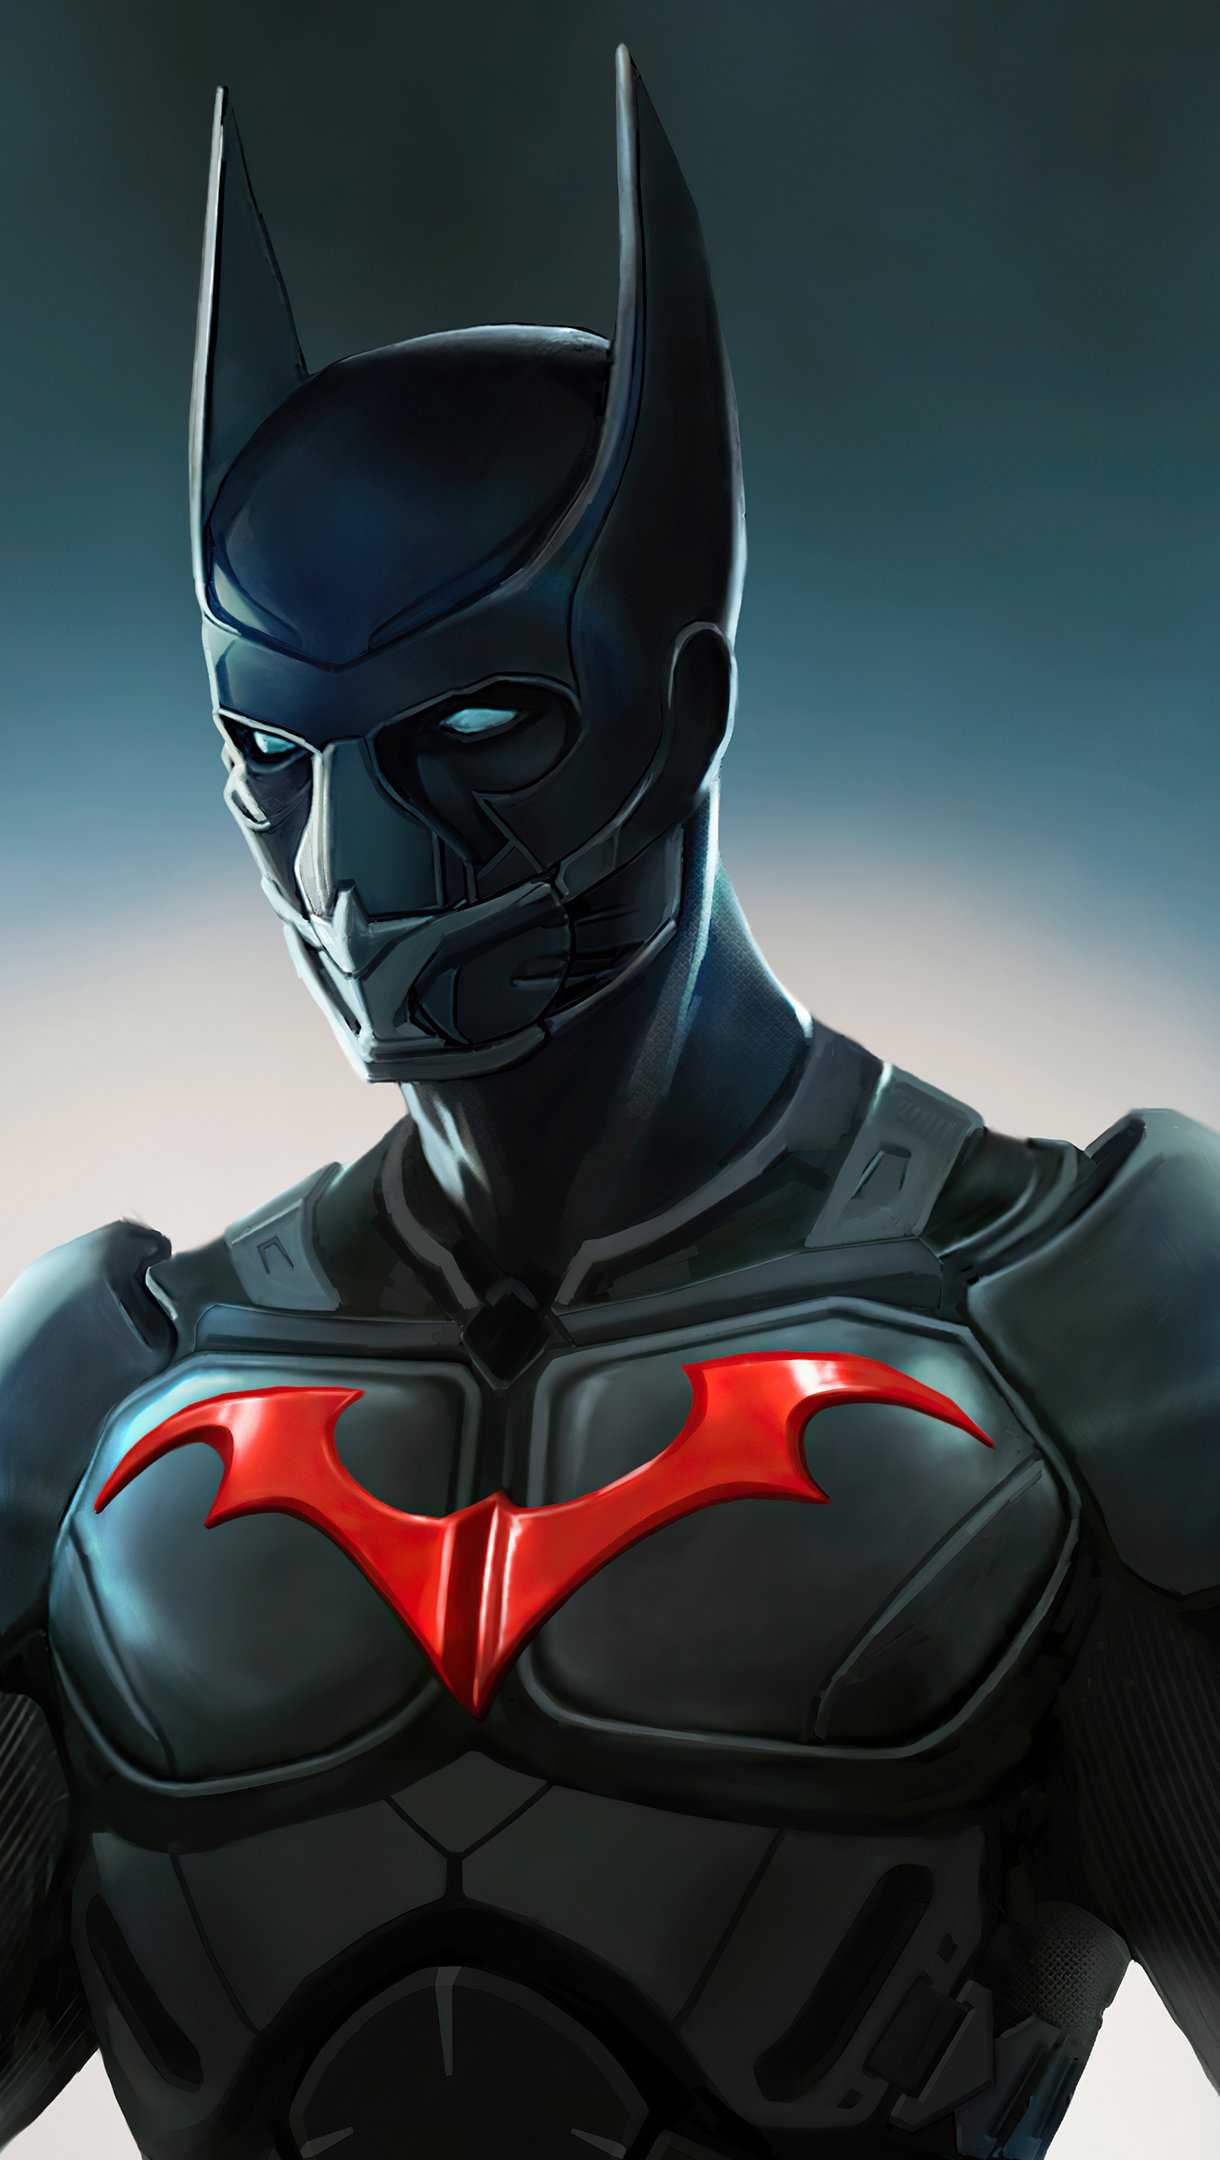 Batman Beyond Action Suit Wallpaper 4k Ultra HD